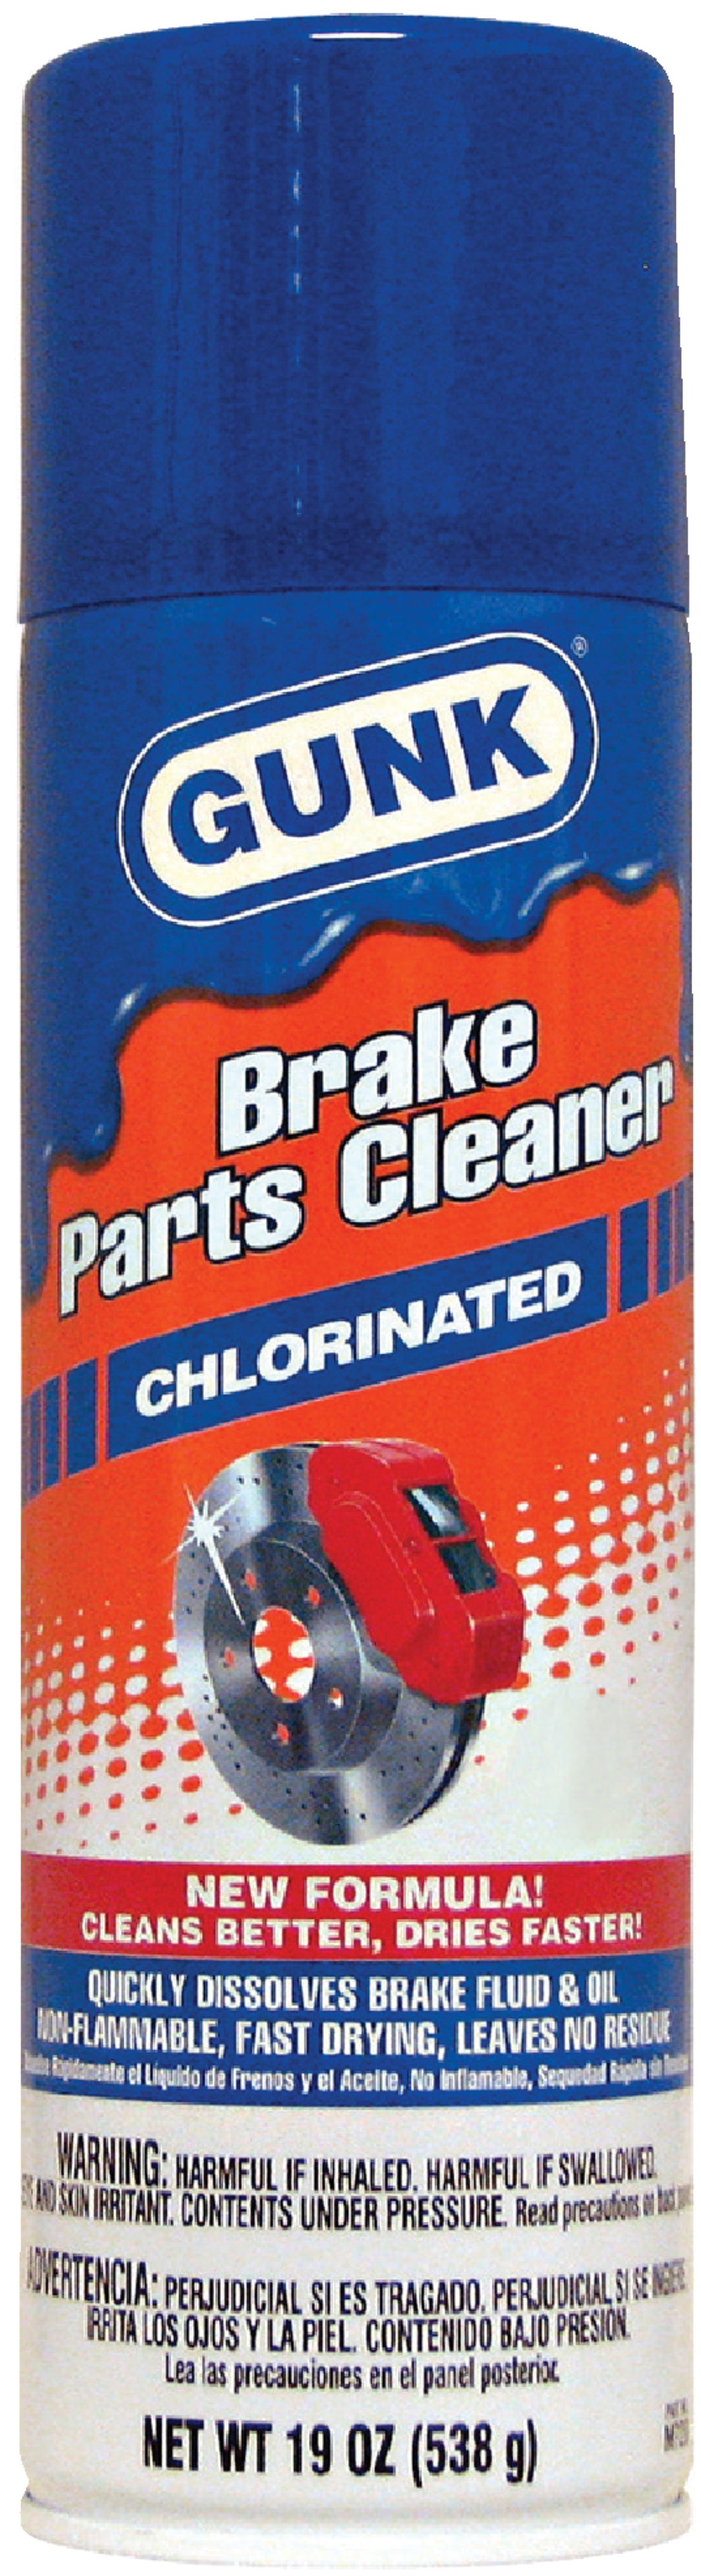 Buy CRC Brakleen Brake Parts Cleaner 15 Oz.